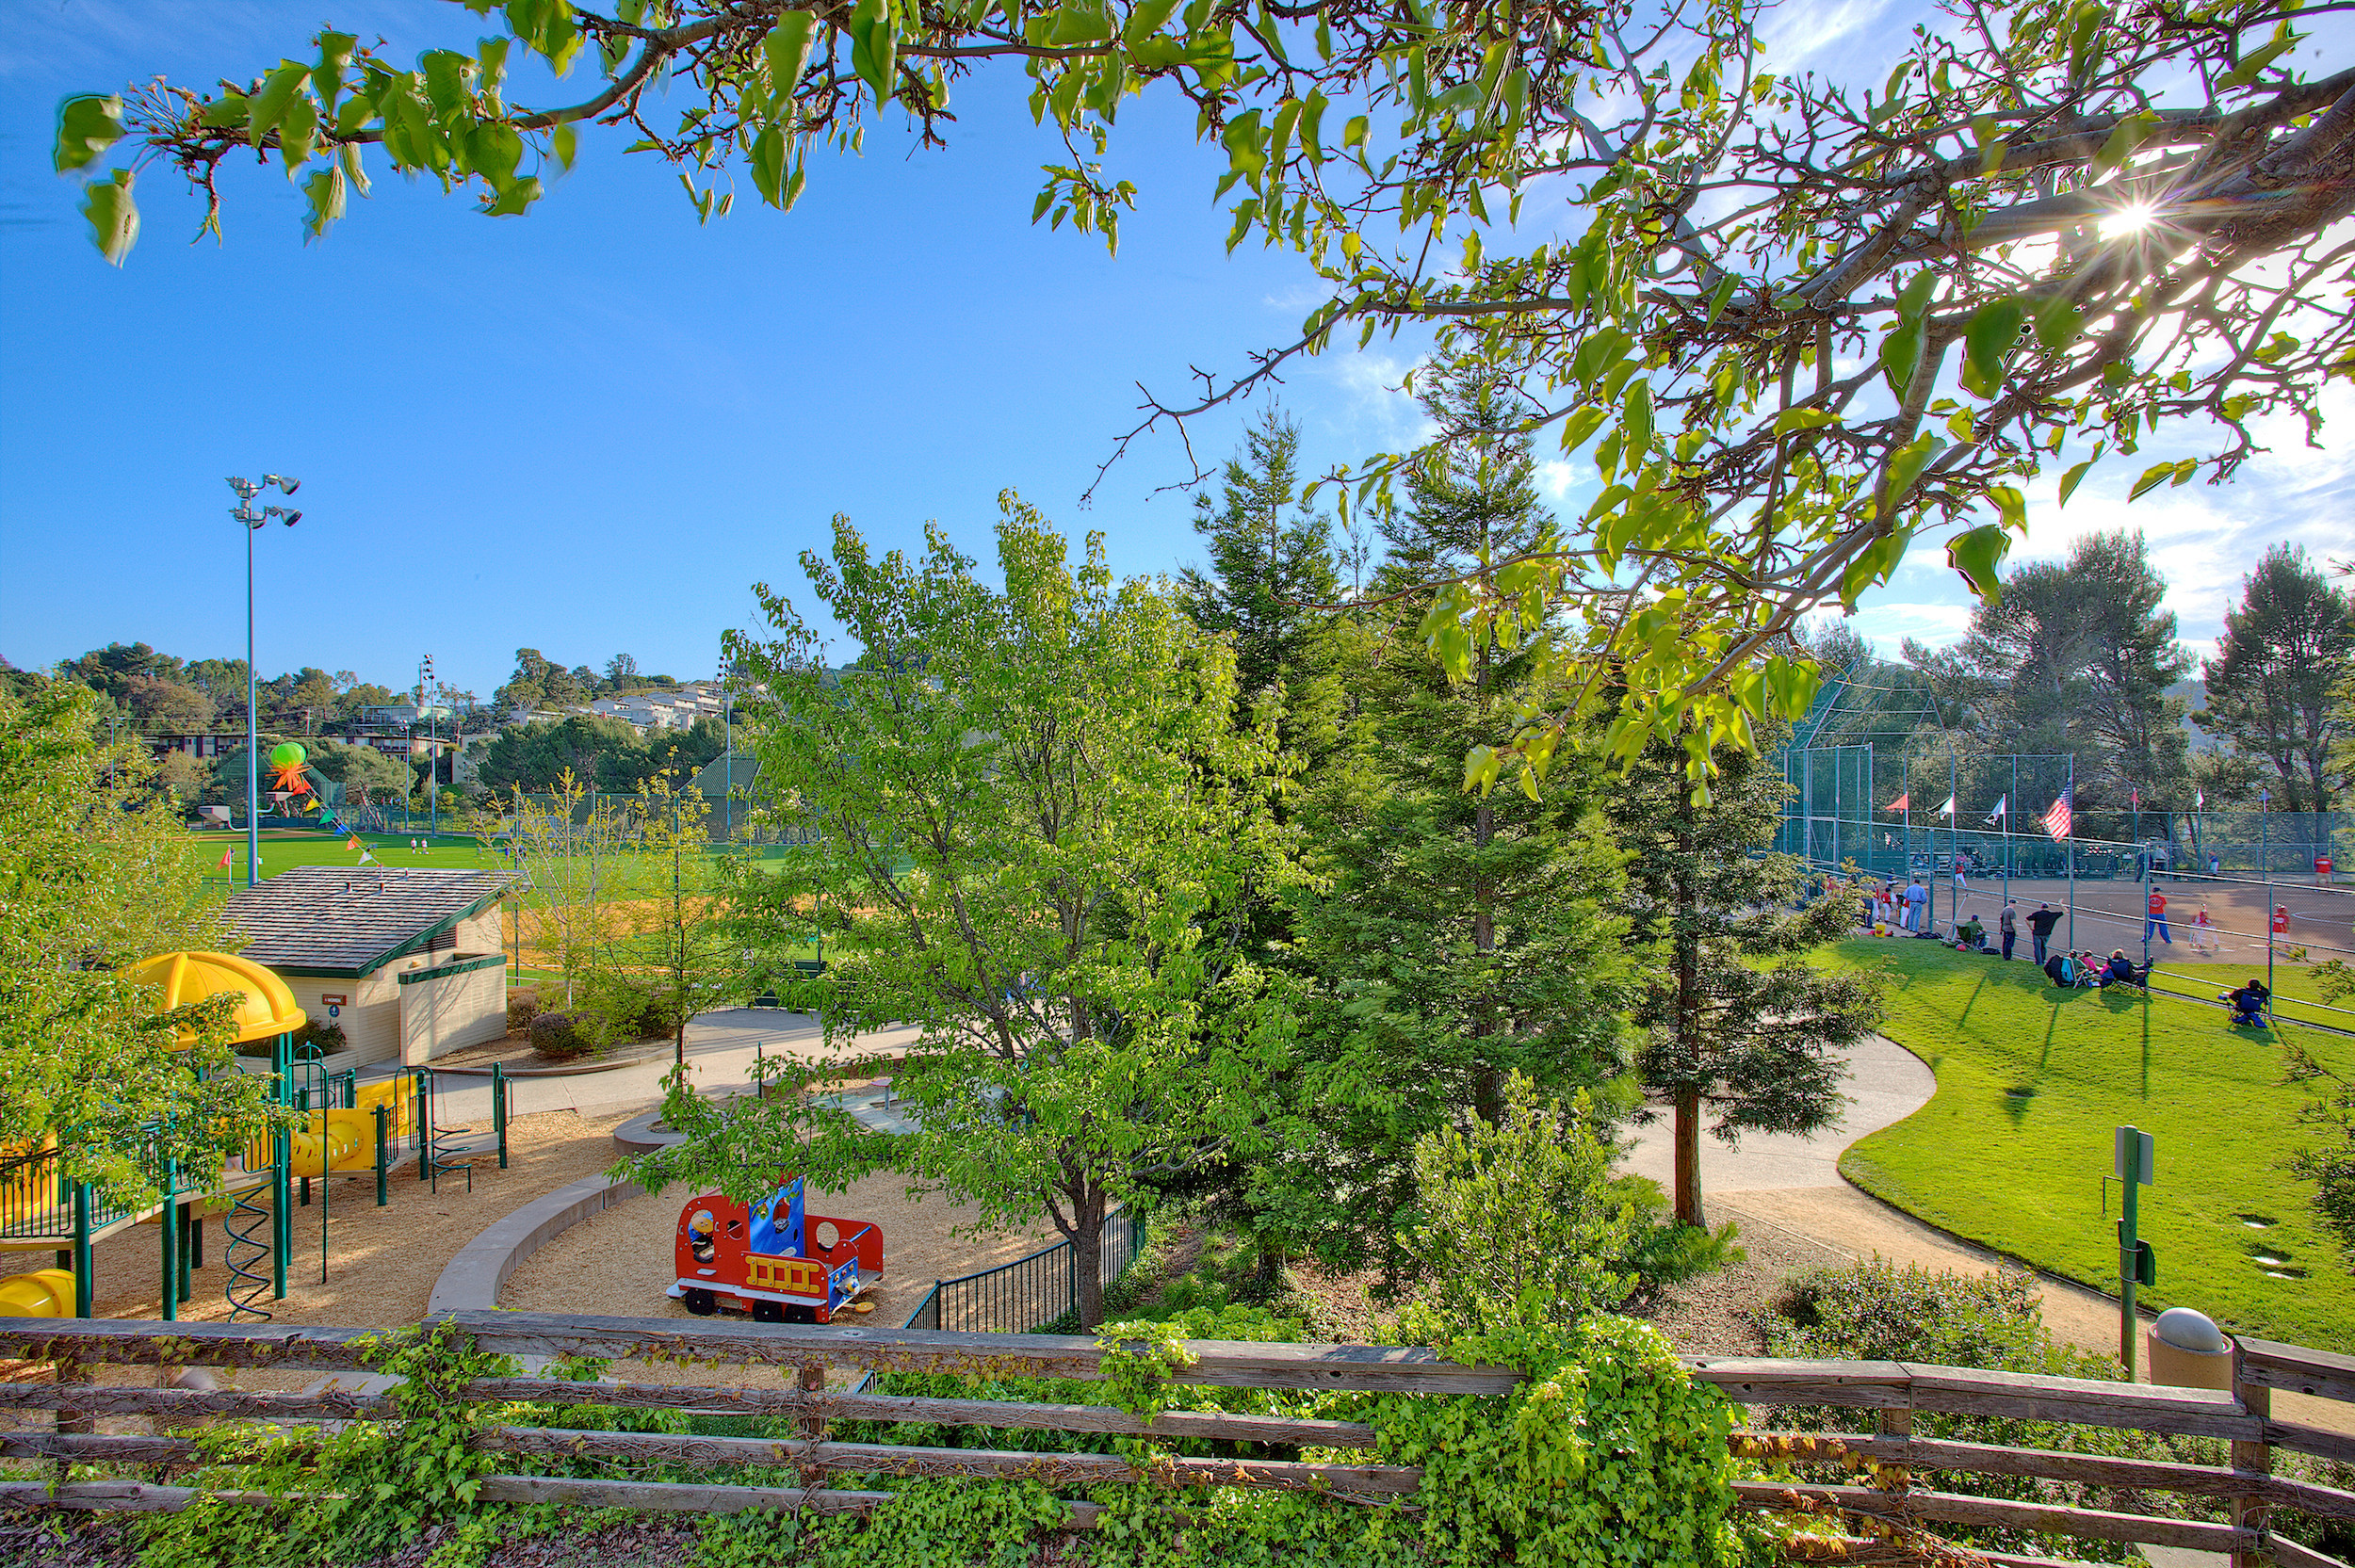 Playground, grass and trees of San Carlos Park